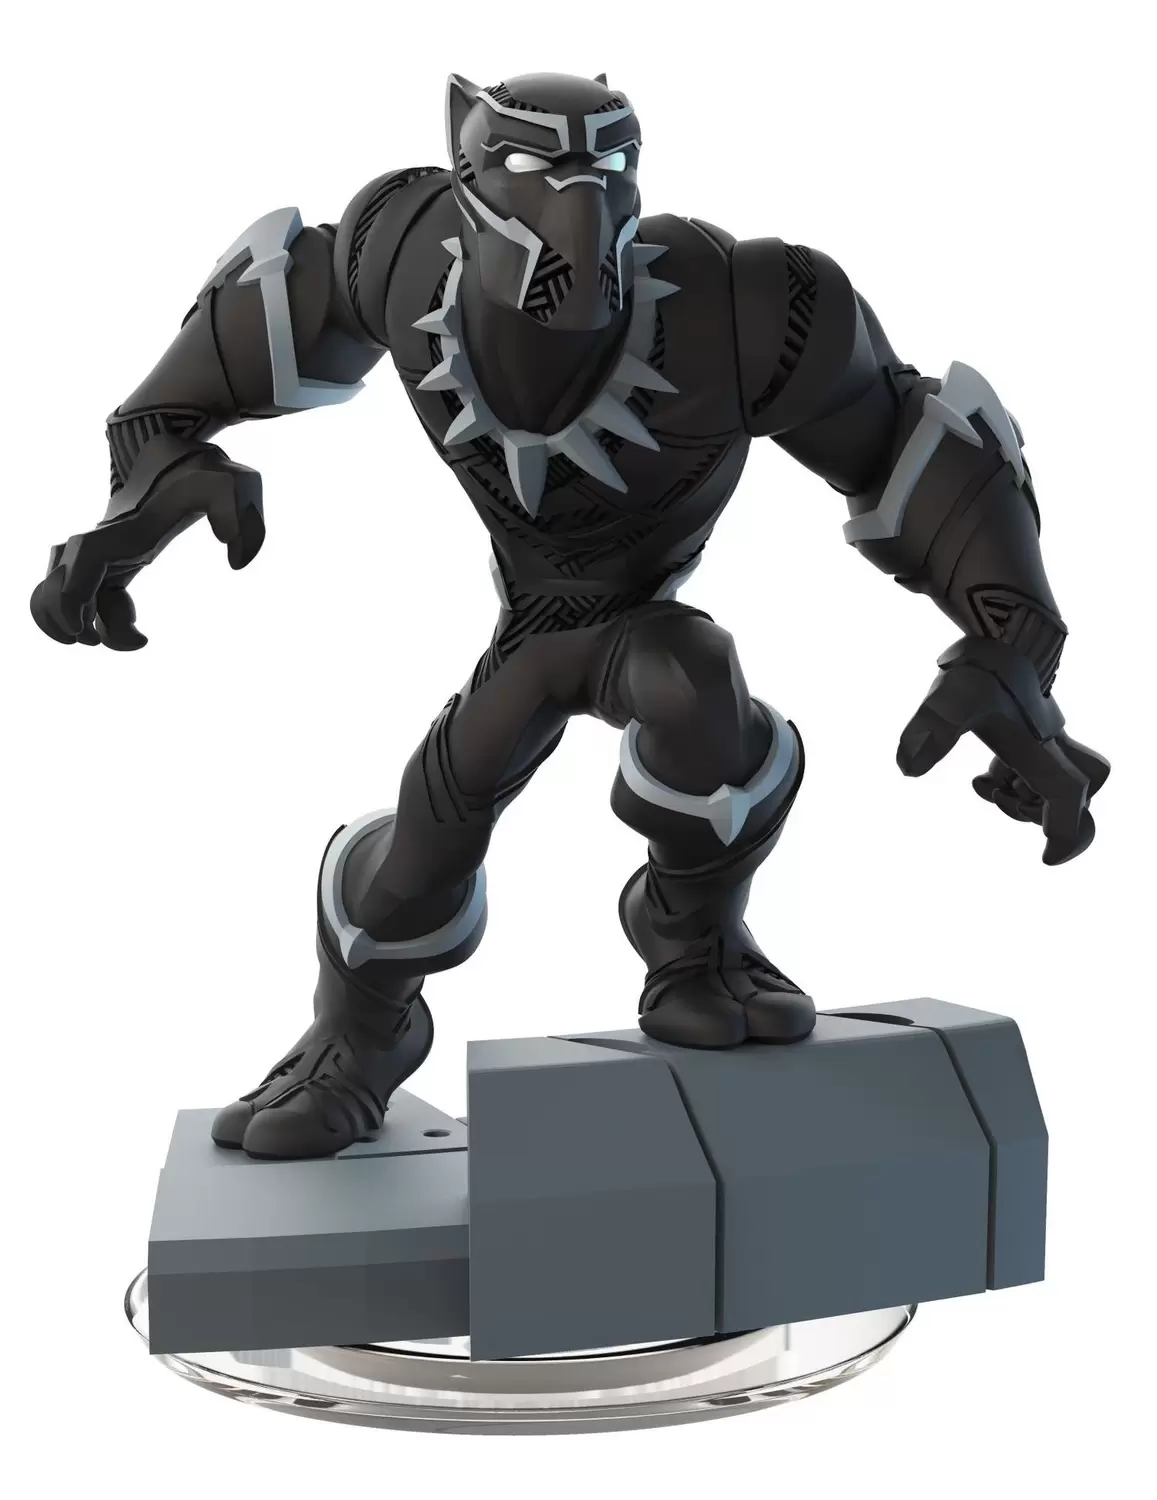 Disney Infinity Action figures - Black Panther